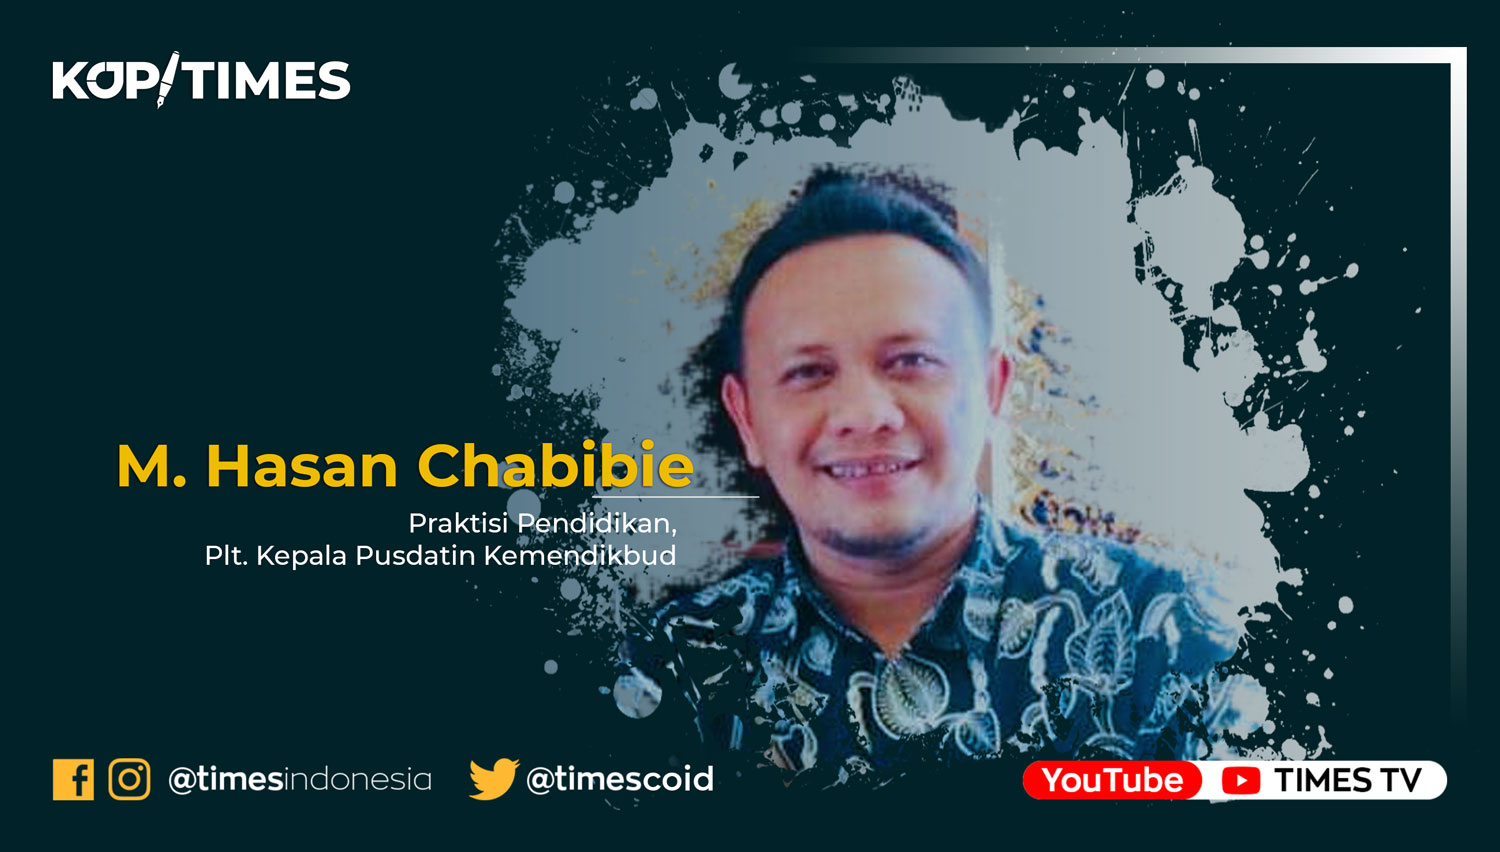 M. Hasan Chabibie, Praktisi Pendidikan, Plt. Kepala Pusdatin Kemendikbud.